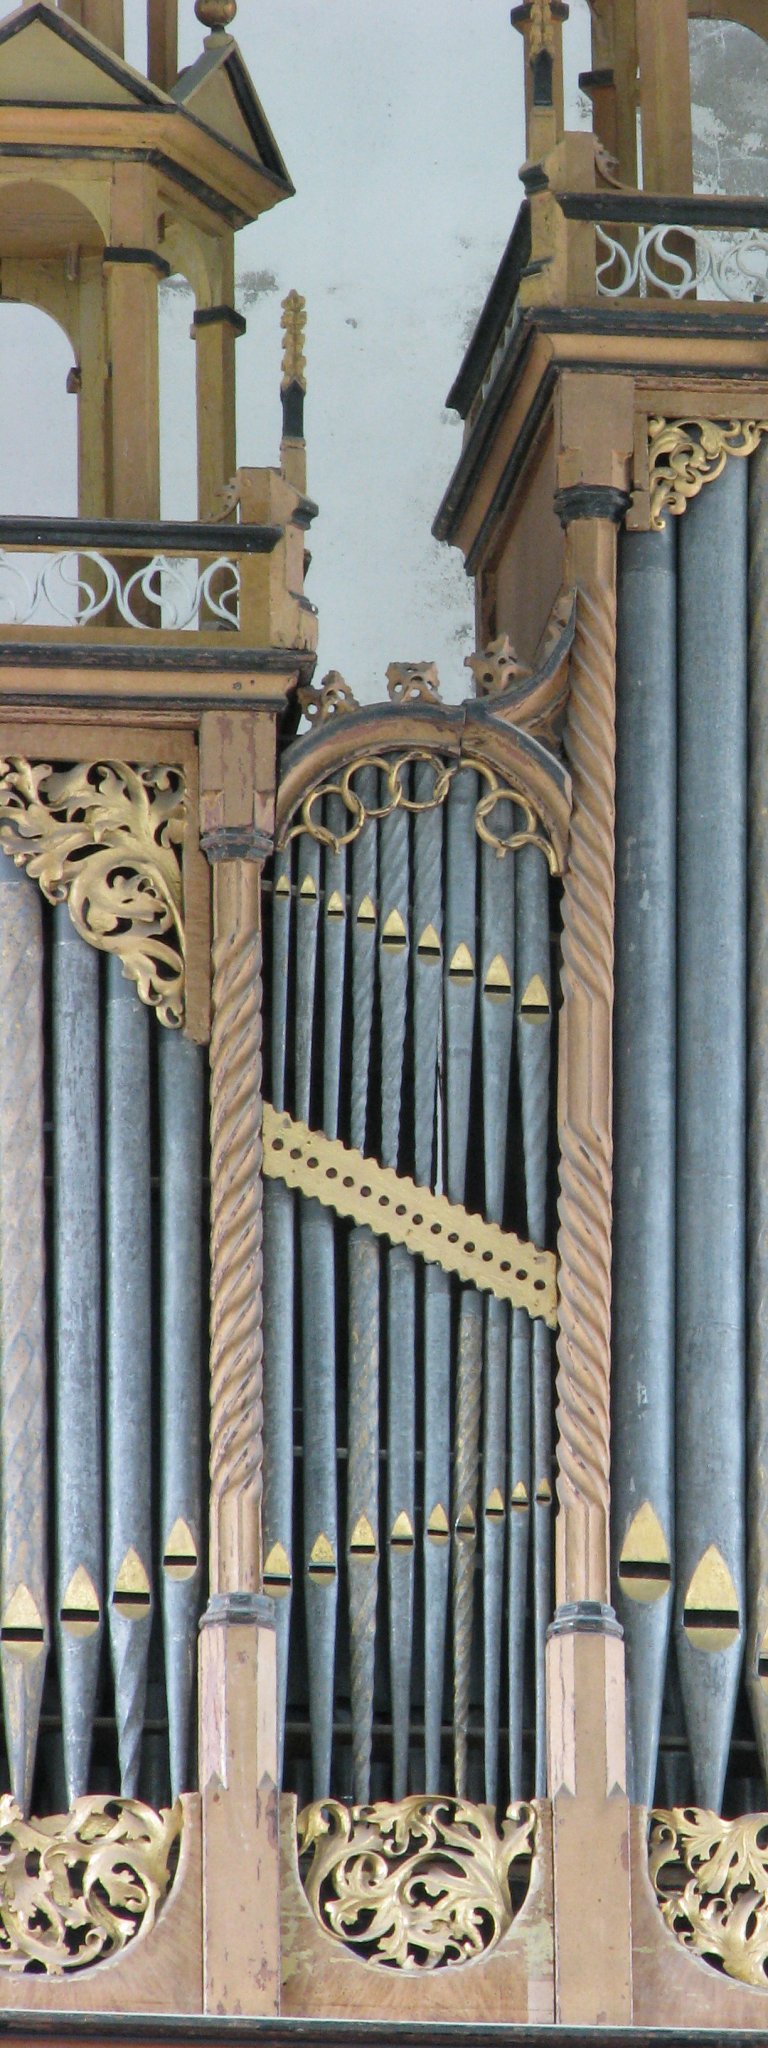 Orgel 1521 